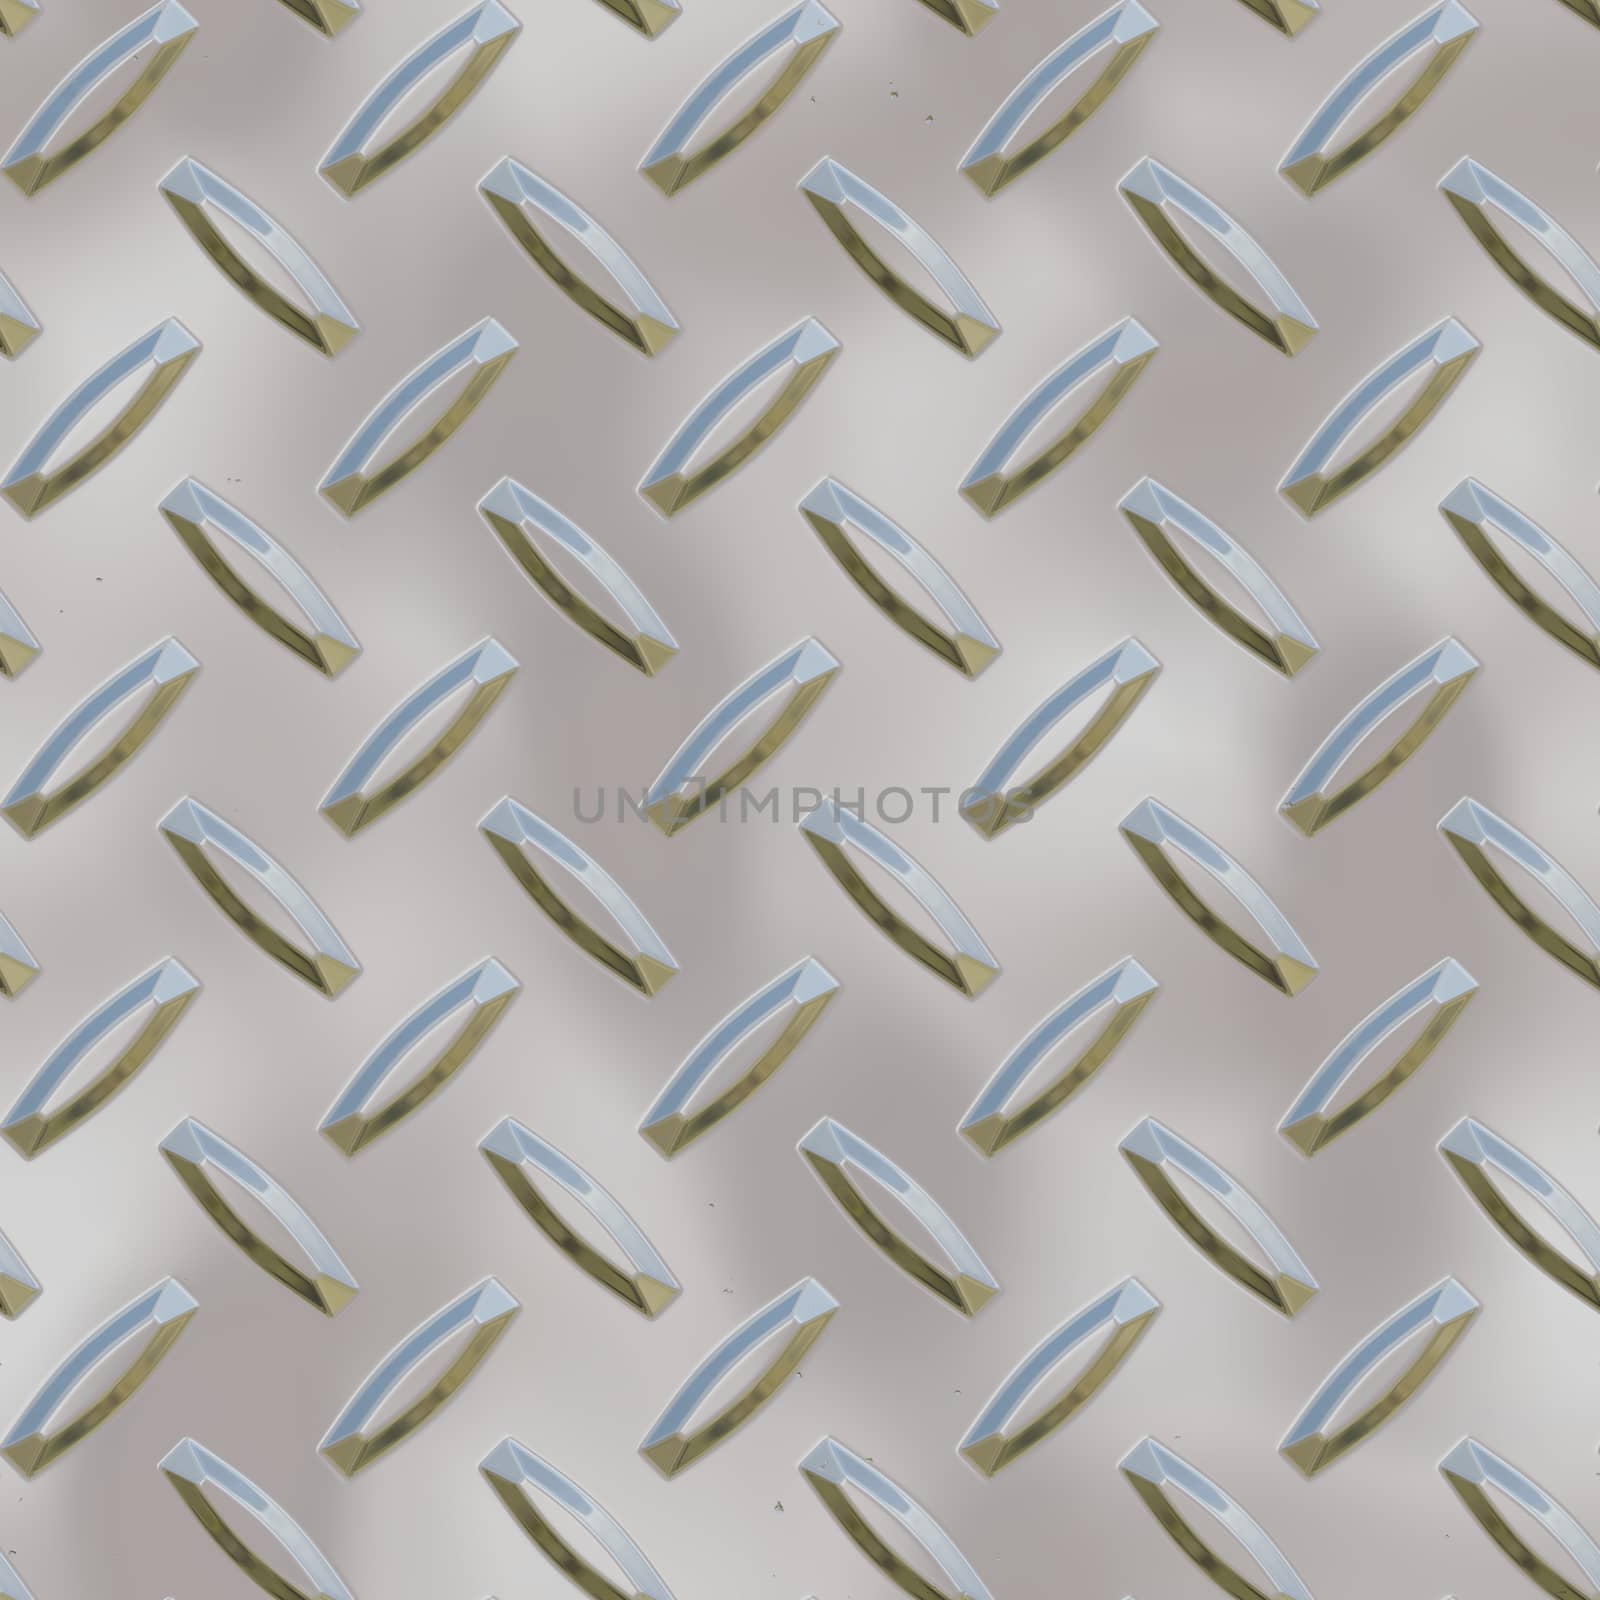 Silver diamond shiny metal plate seamless pattern, or texture.